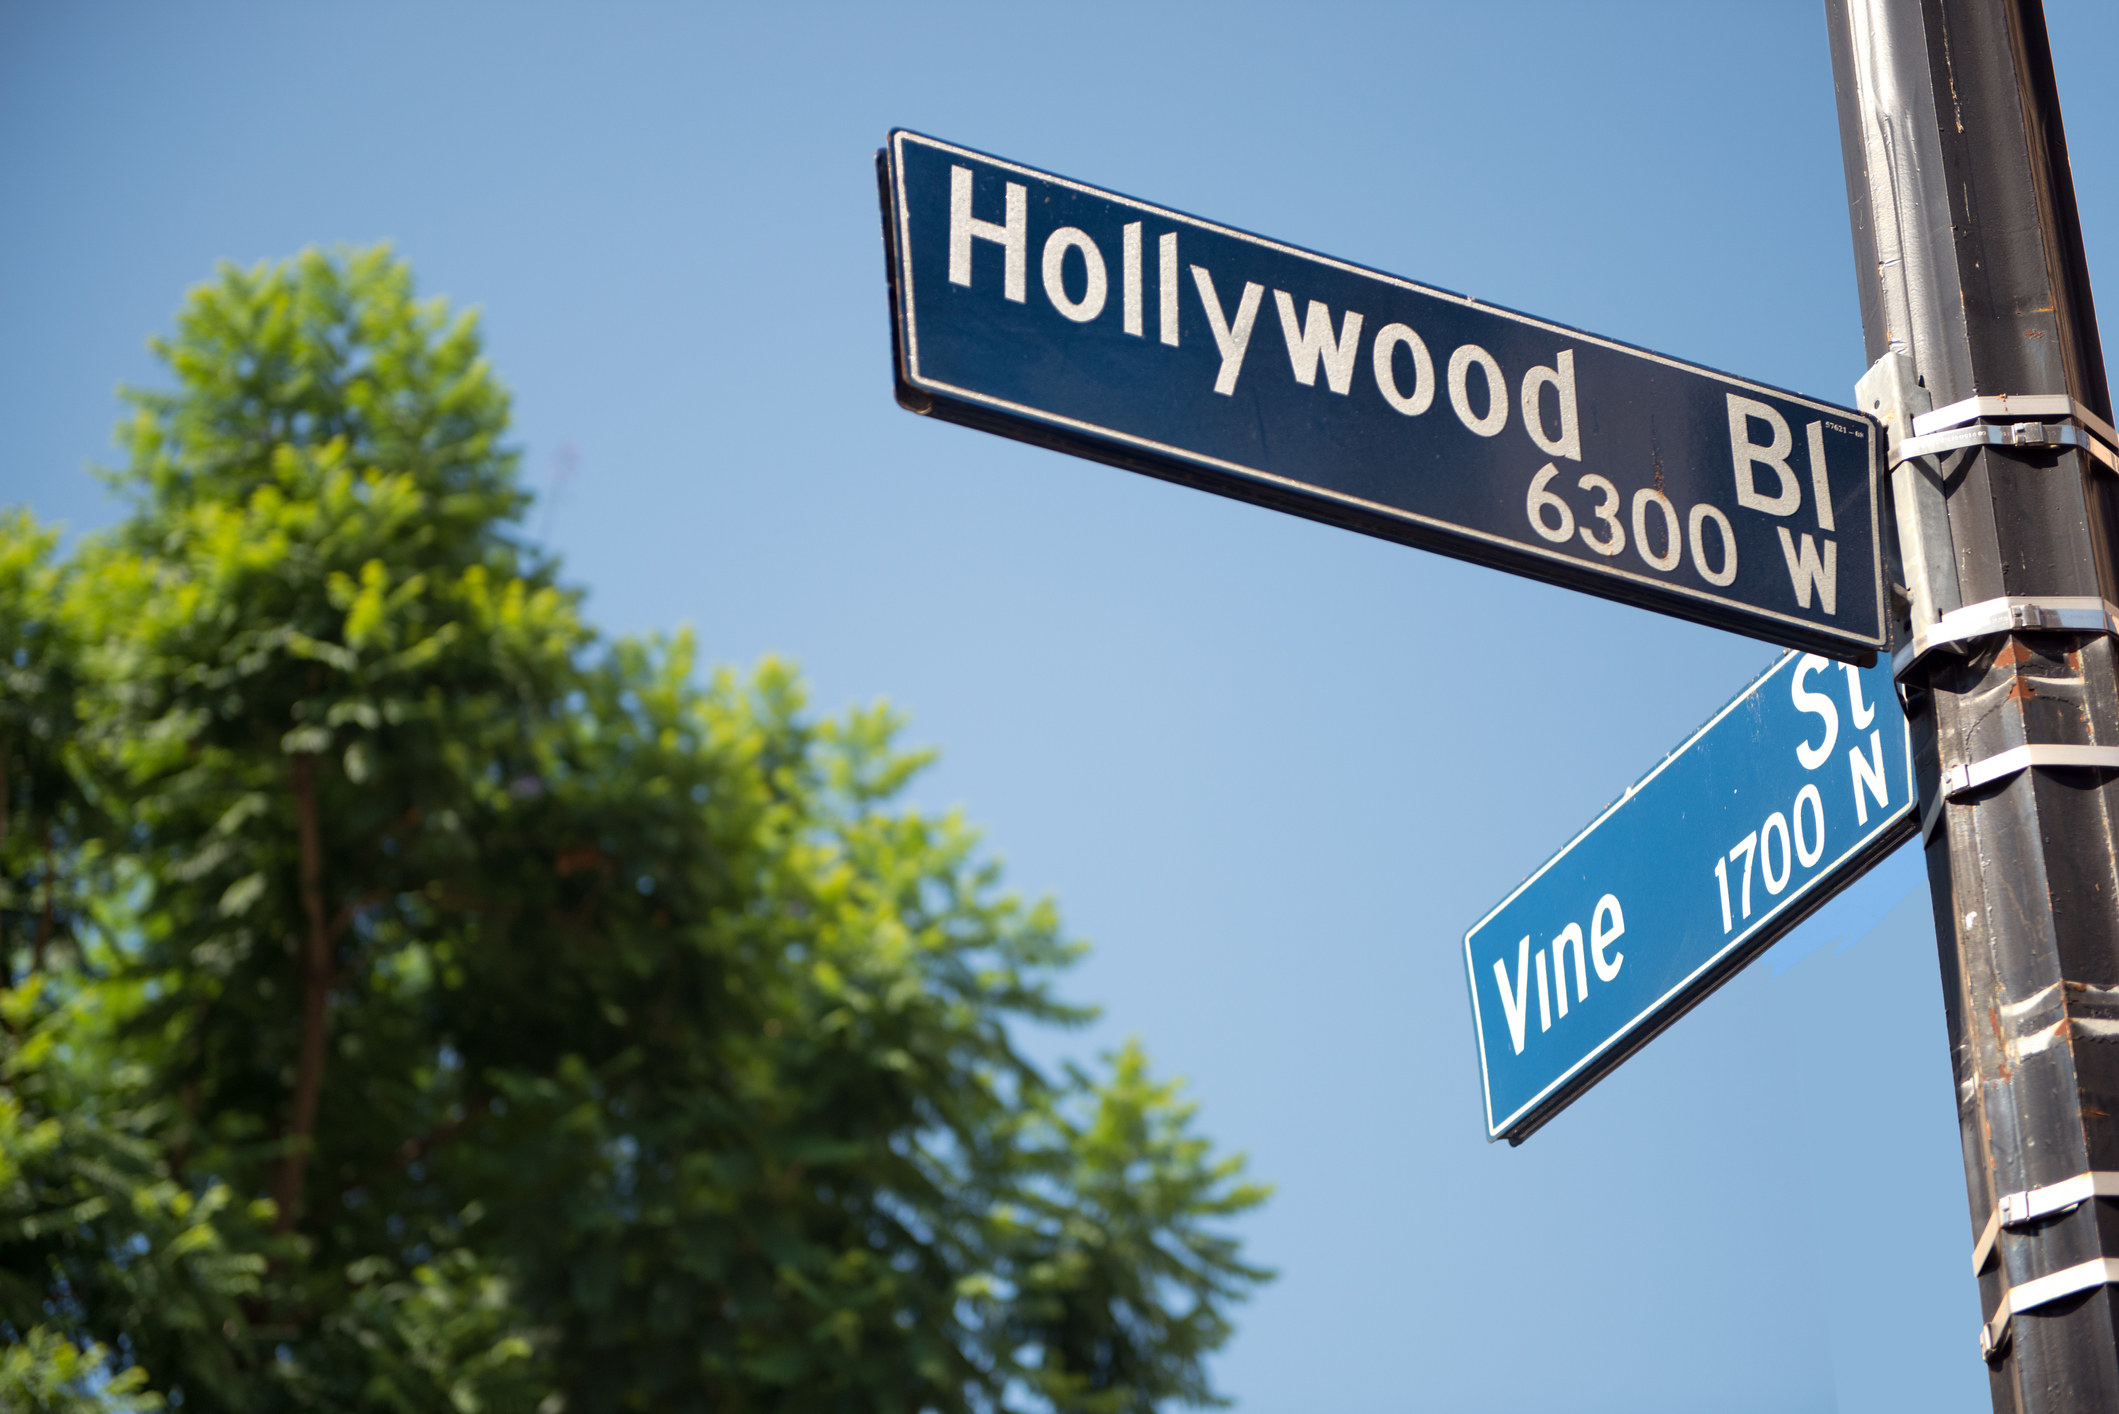 A sign for Hollywood Boulevard